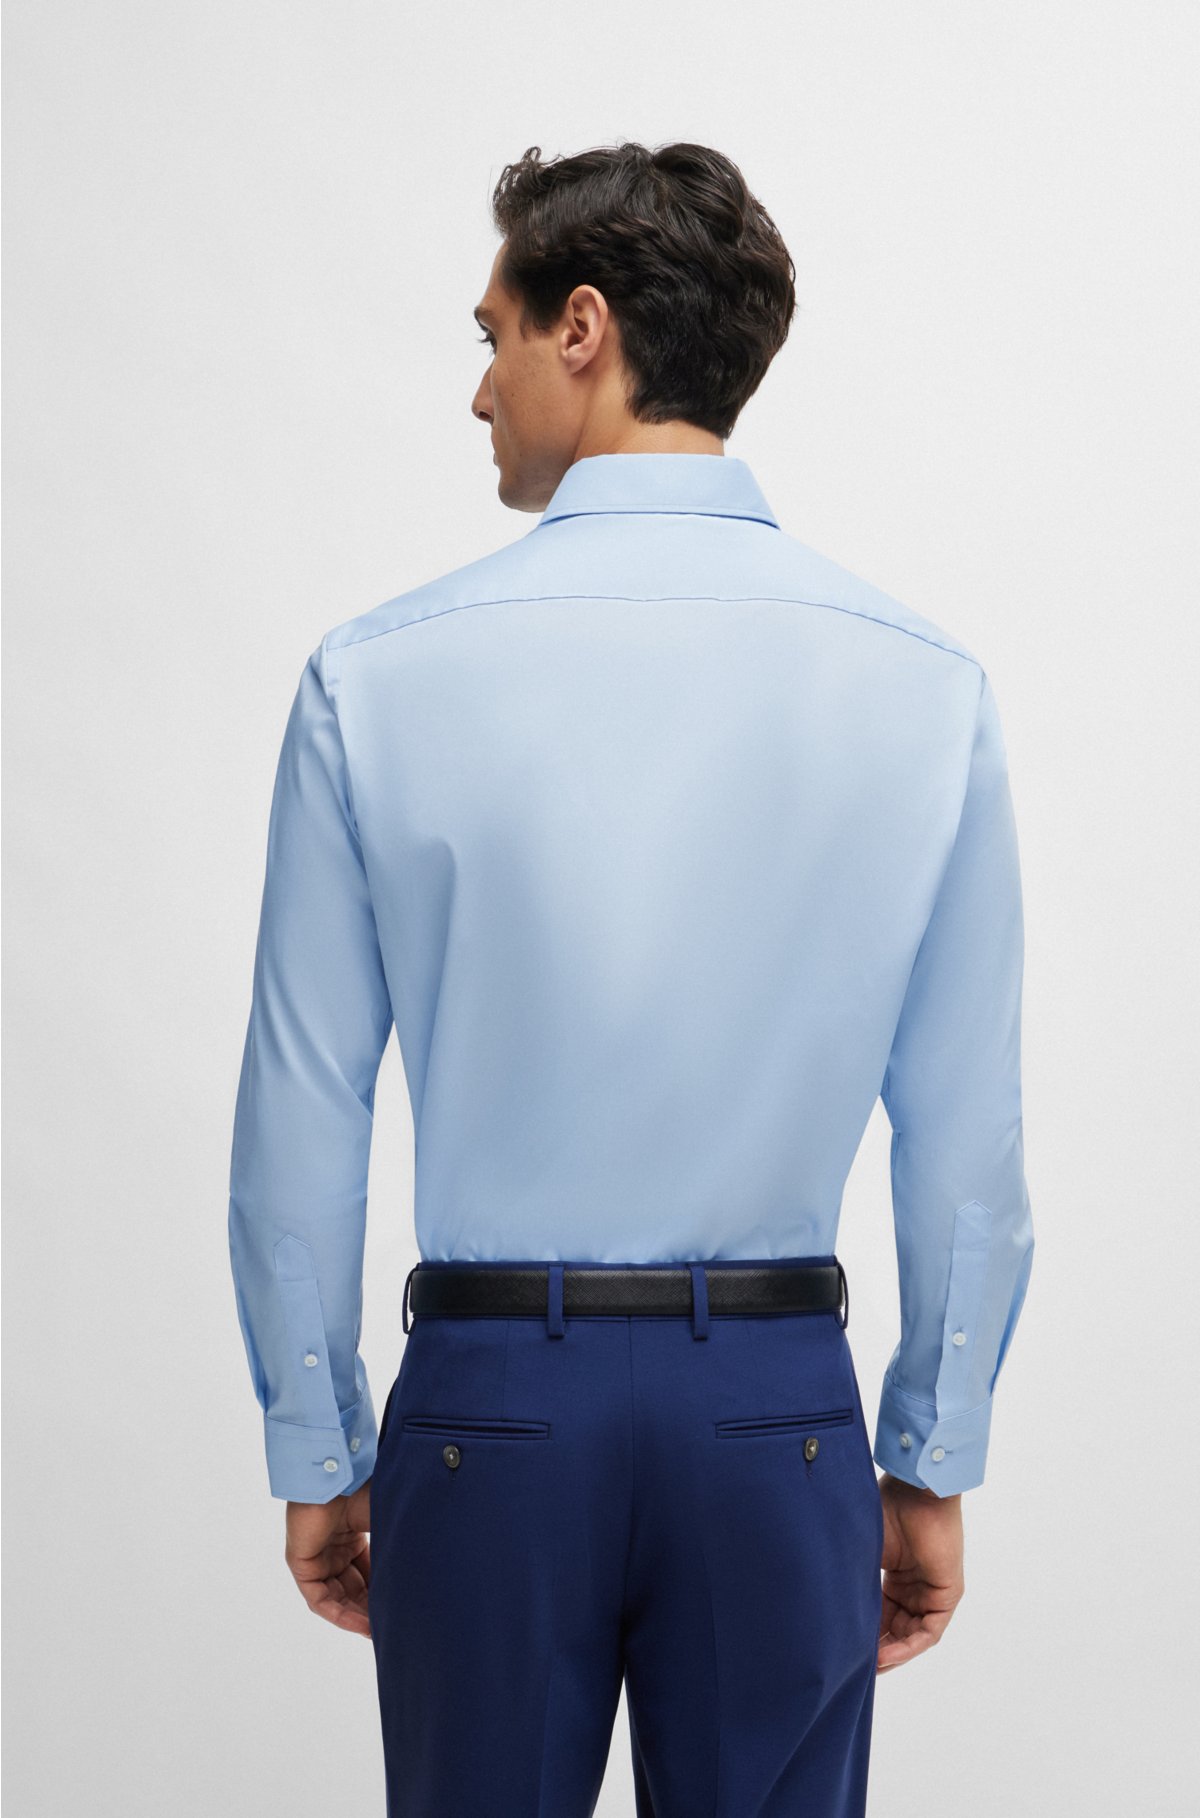 Regular-fit shirt in easy-iron cotton poplin, Light Blue